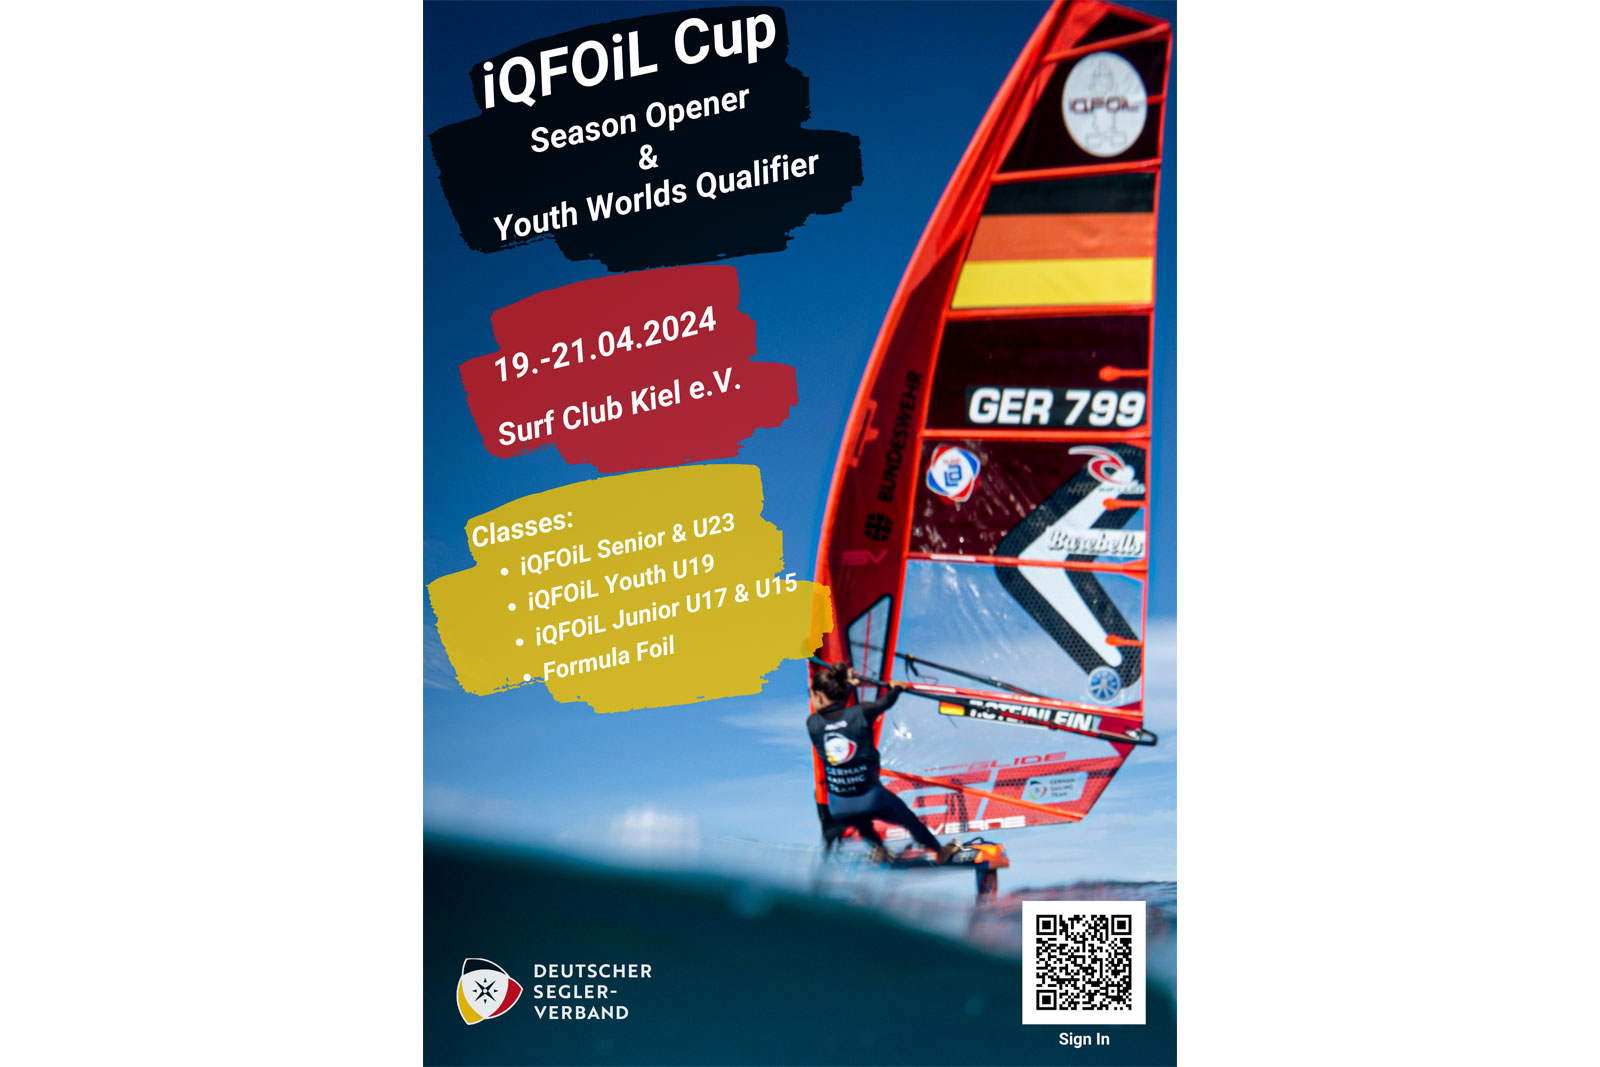 Season Opener: IQ Foil Cup Kiel Ranglistenregatta im April